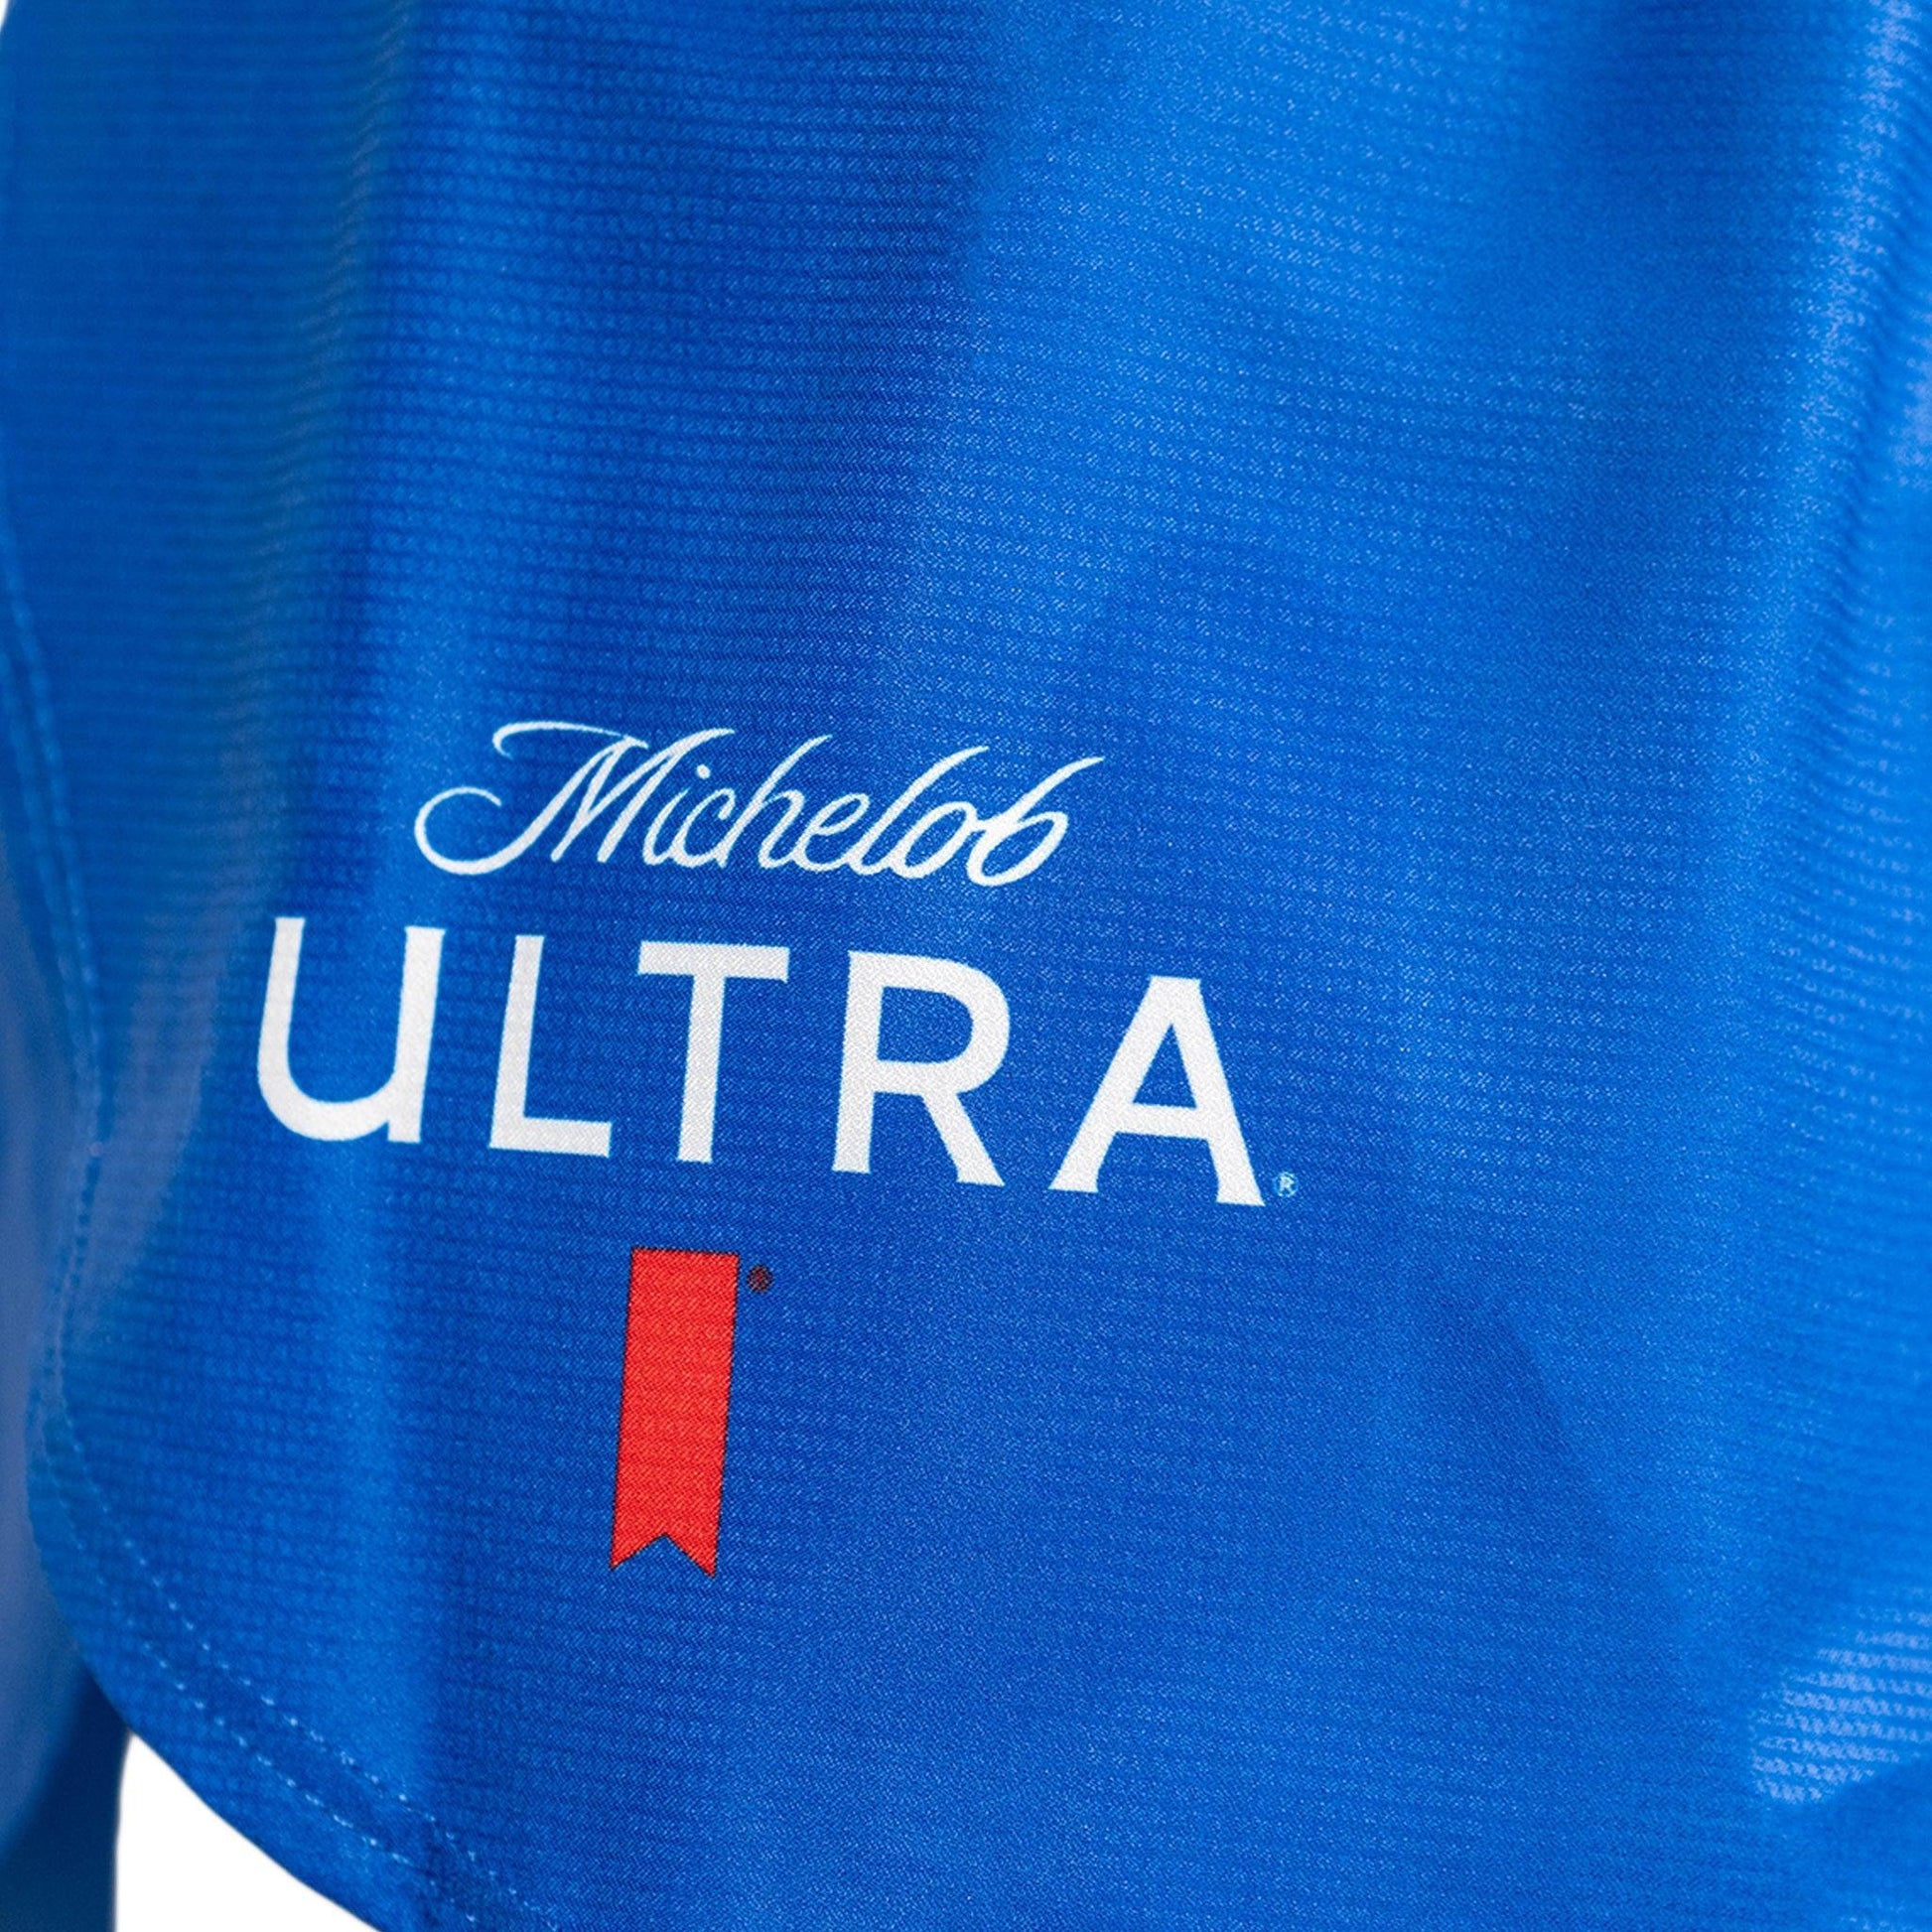 Michelob ULTRA X New Balance Marathon Running Shorts - Material Closeup